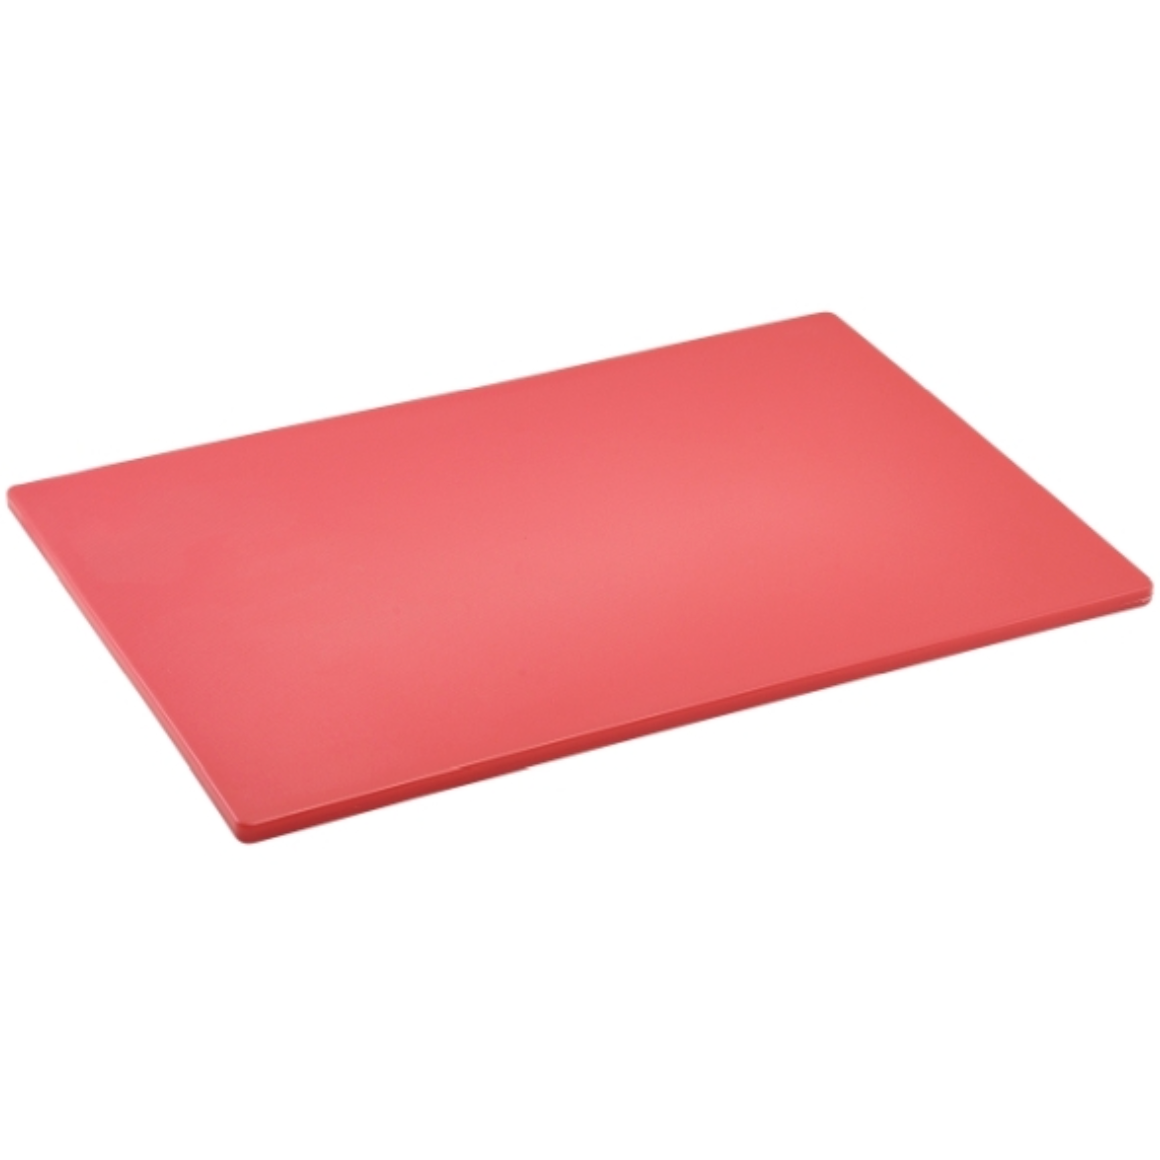 GenWare Red Low Density Chopping Board 45.7 x 30.5 x 1.2cm